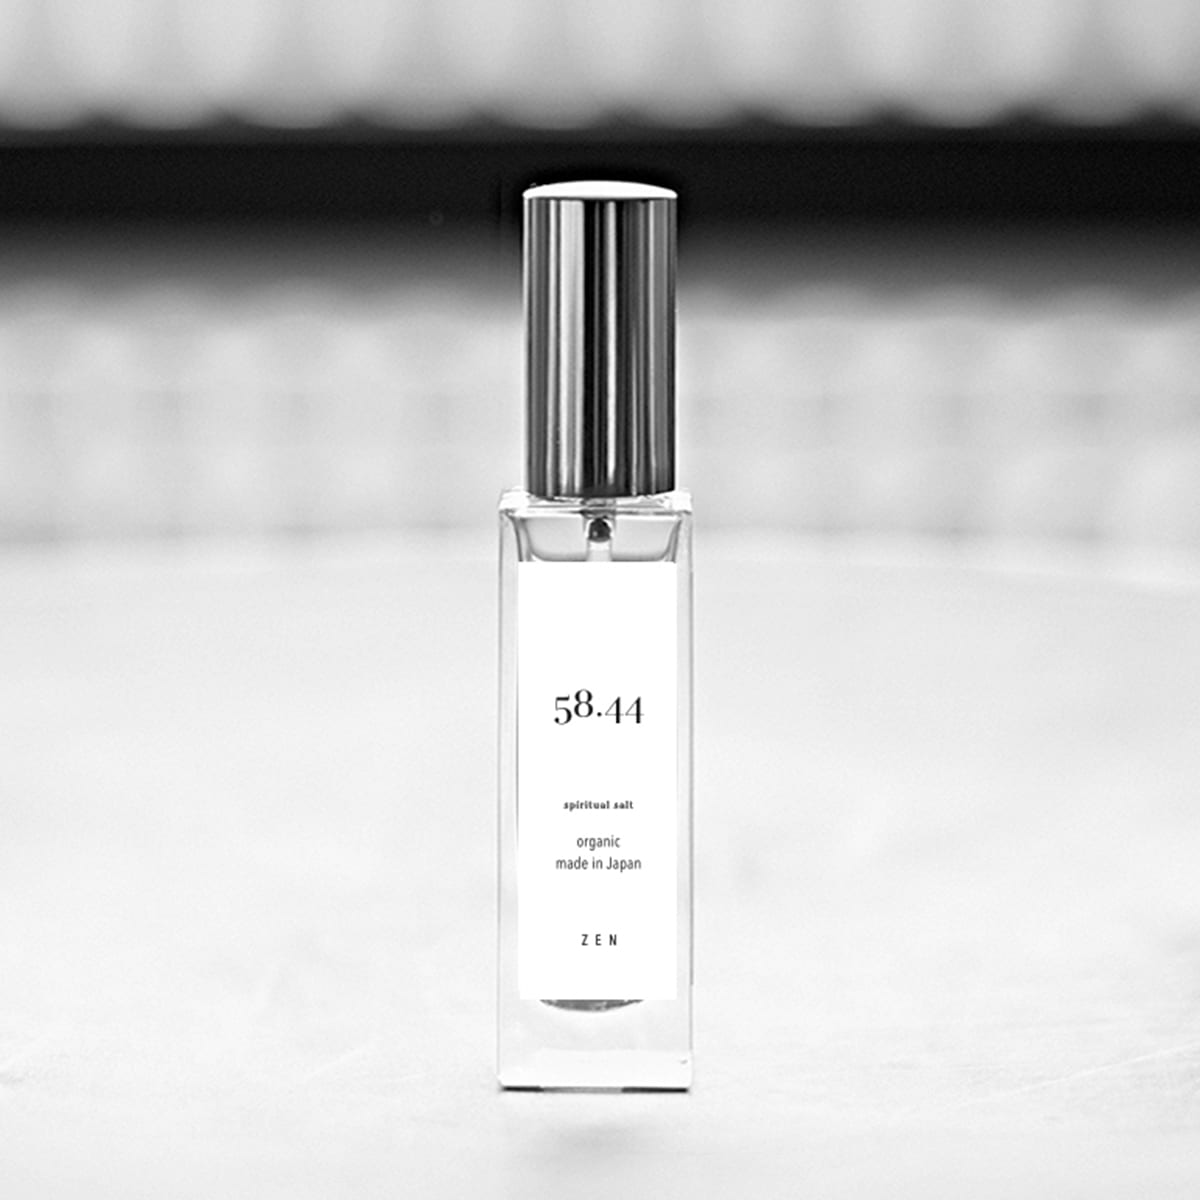 Fragrance:SEI